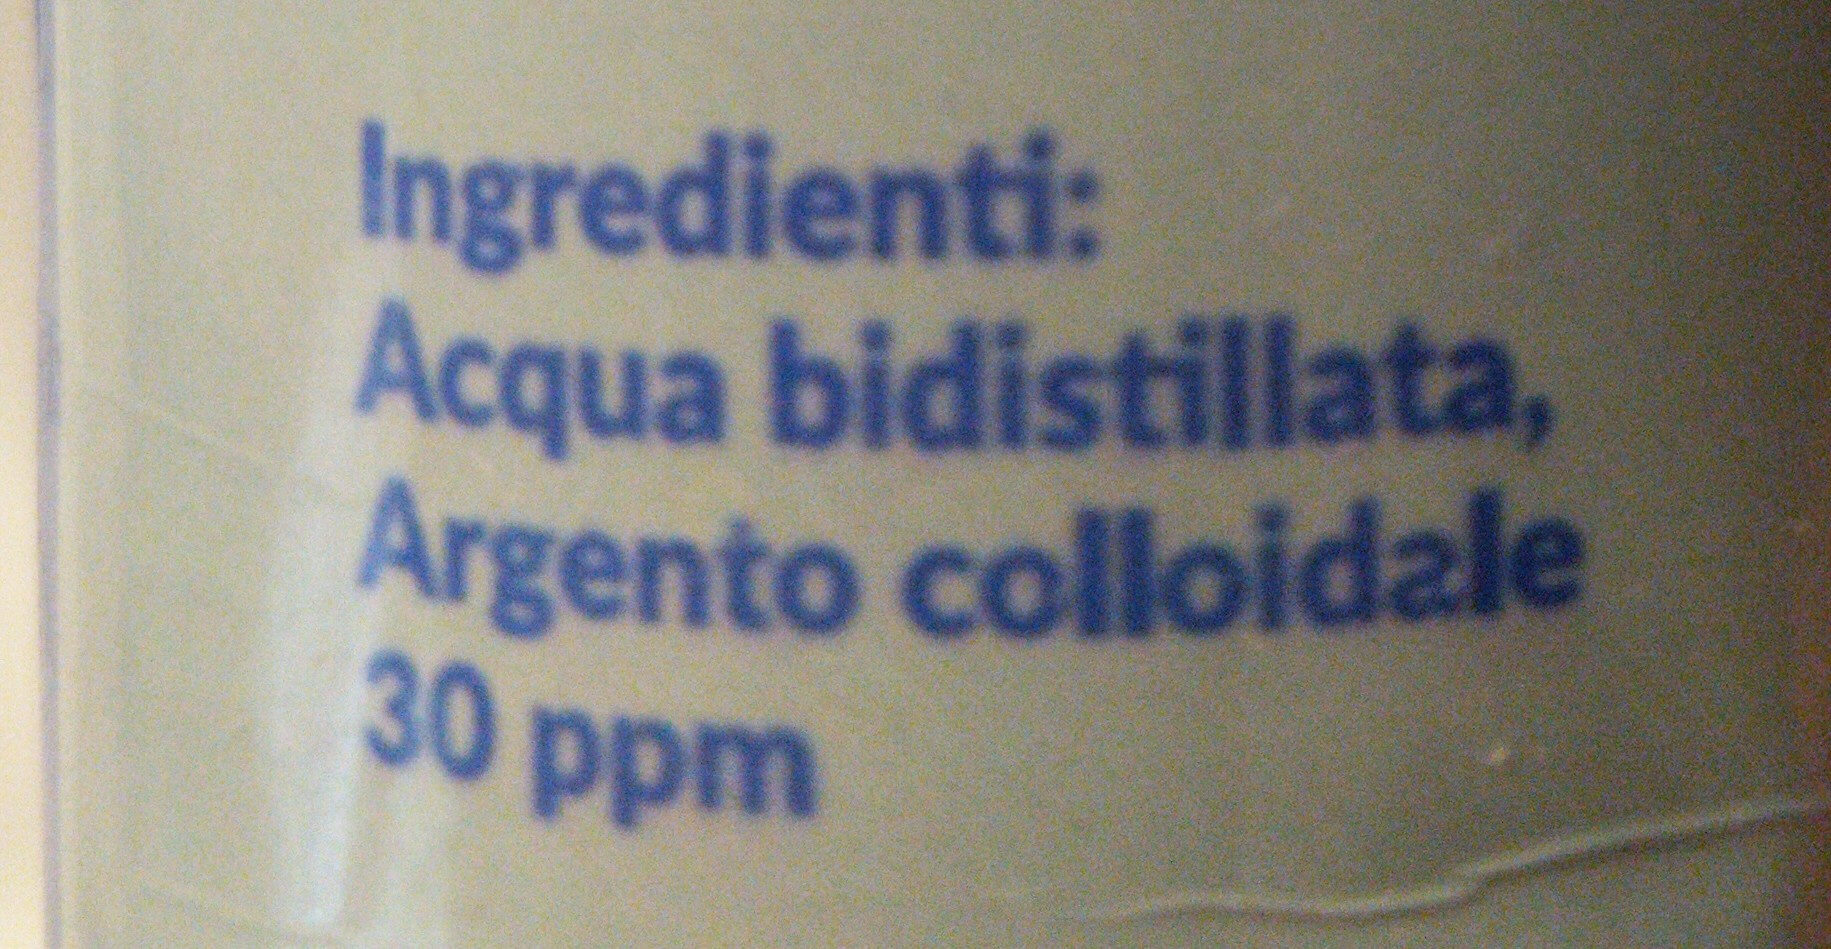 Argento Colloidale Plus aerosol - Ingredients - it